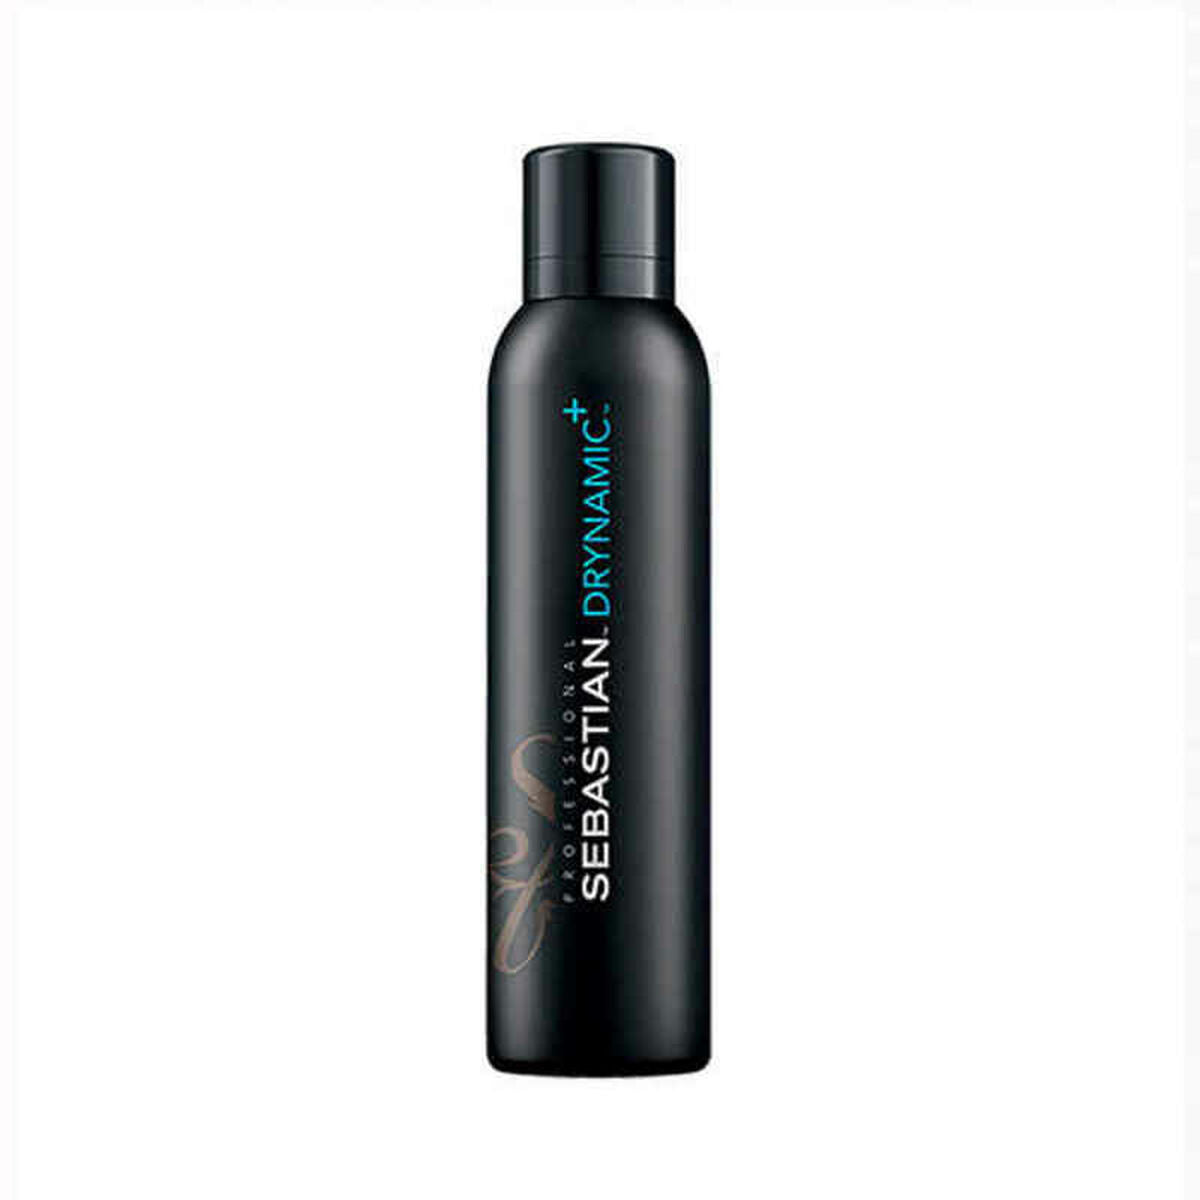 Dry Shampoo Drynamic Sebastian (212 ml)